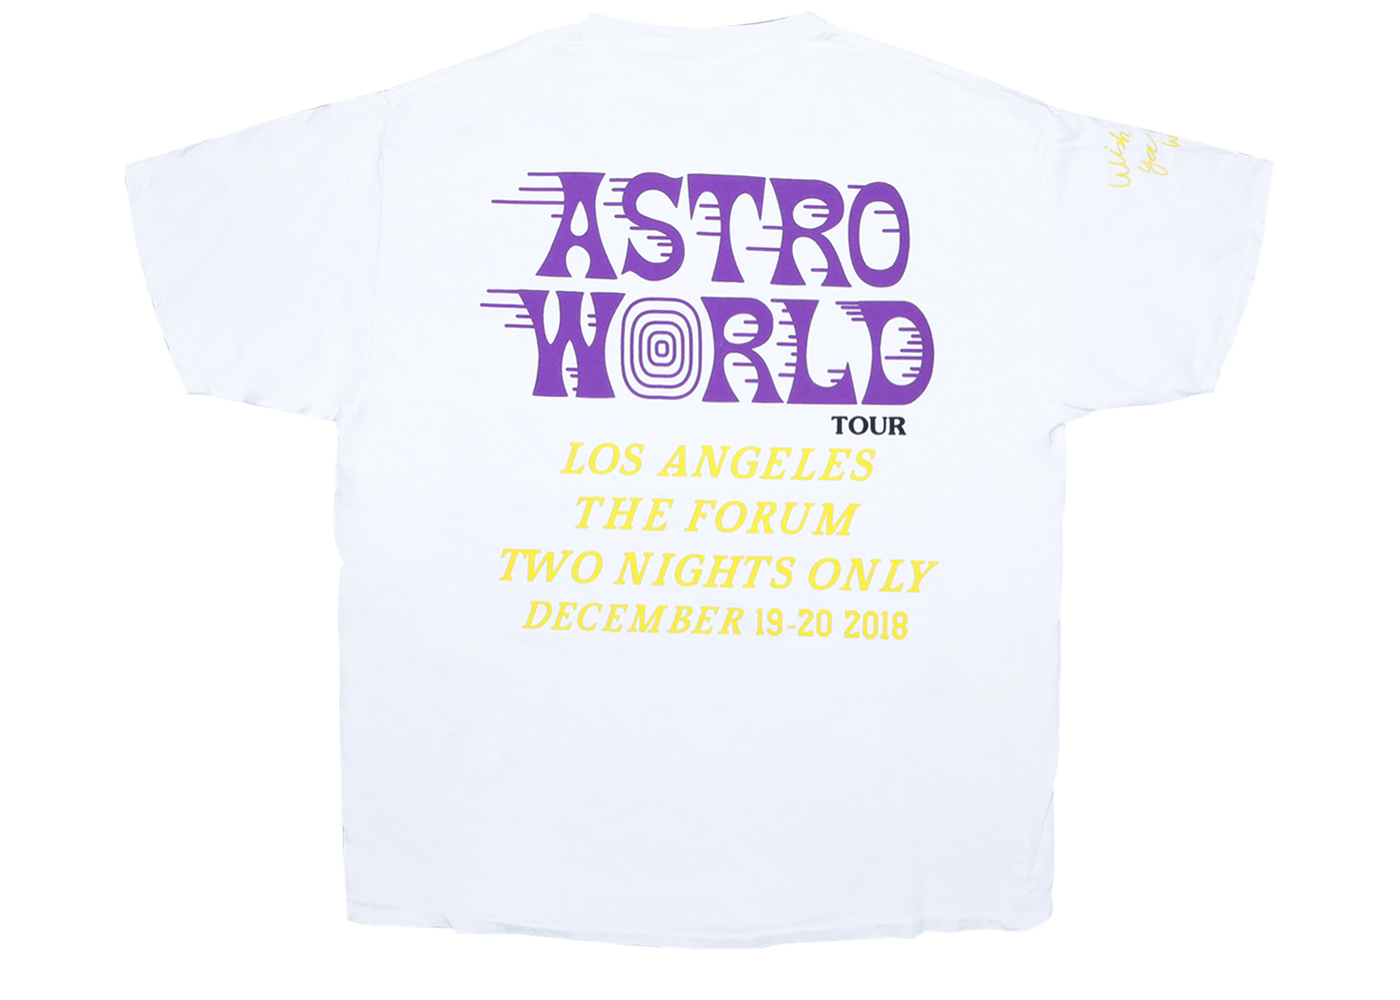 astroworld shirt nike